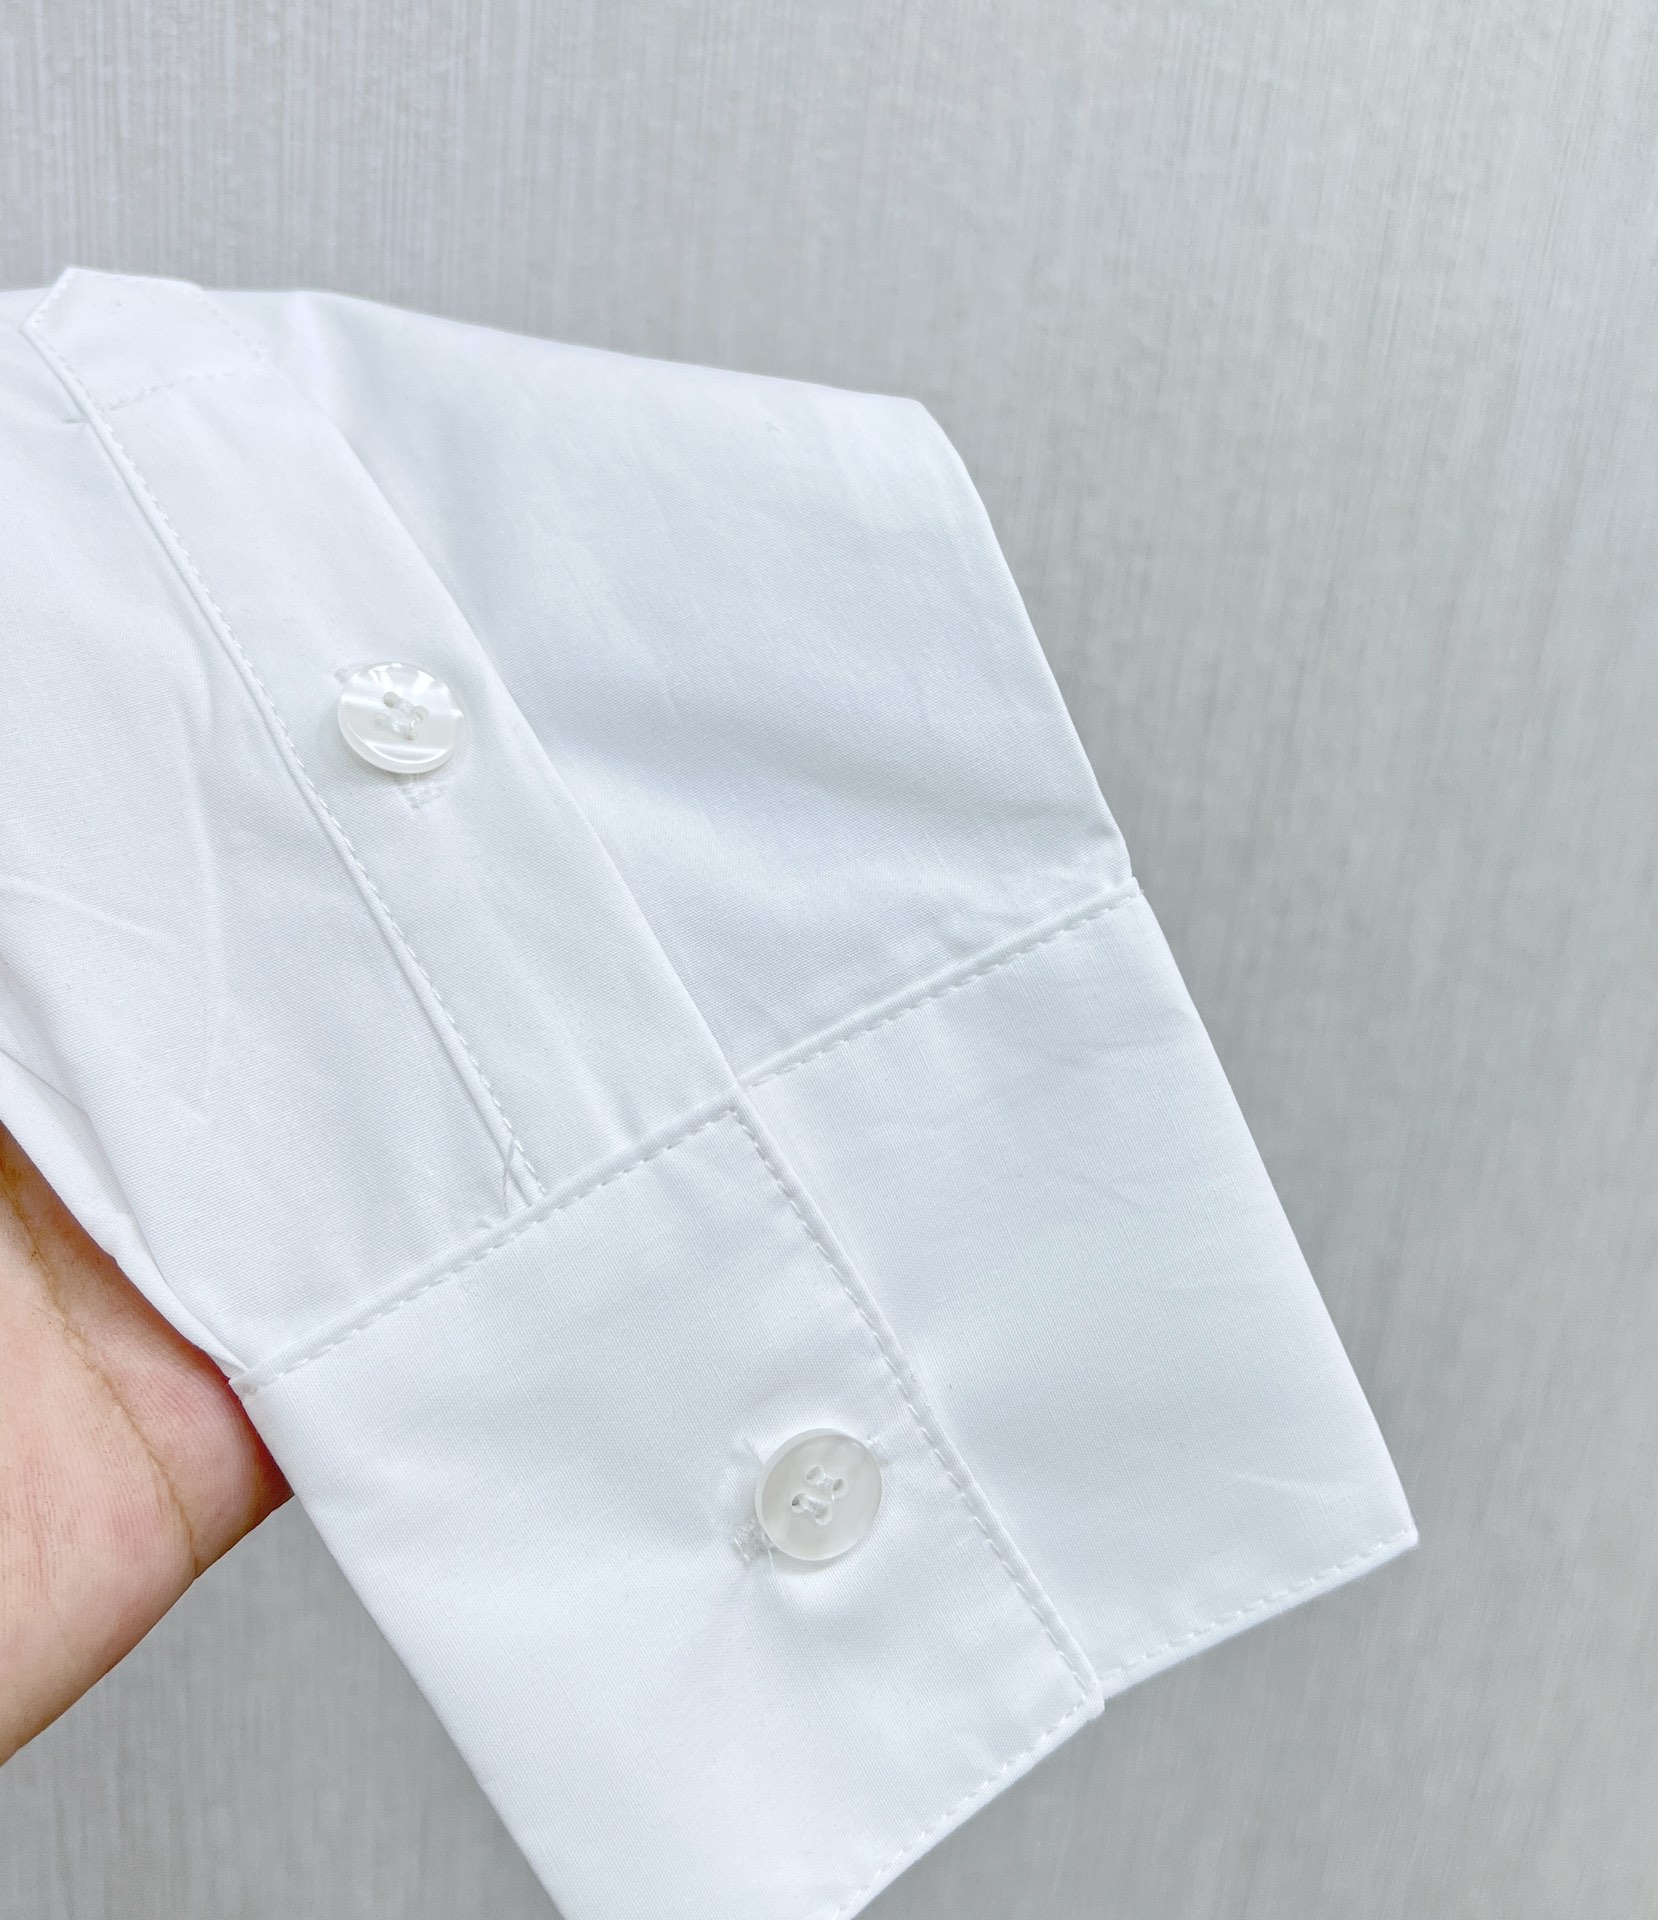 Alexa*derwang24SS新品皮带衬衫时髦精单品自带皮带束腰设计！宽松版型剪裁打造帅气随性的通勤